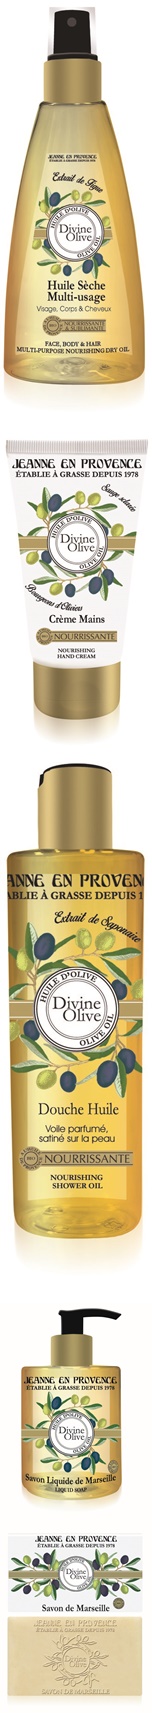 Jeanne En Provence amplia su gama Divine Olive 